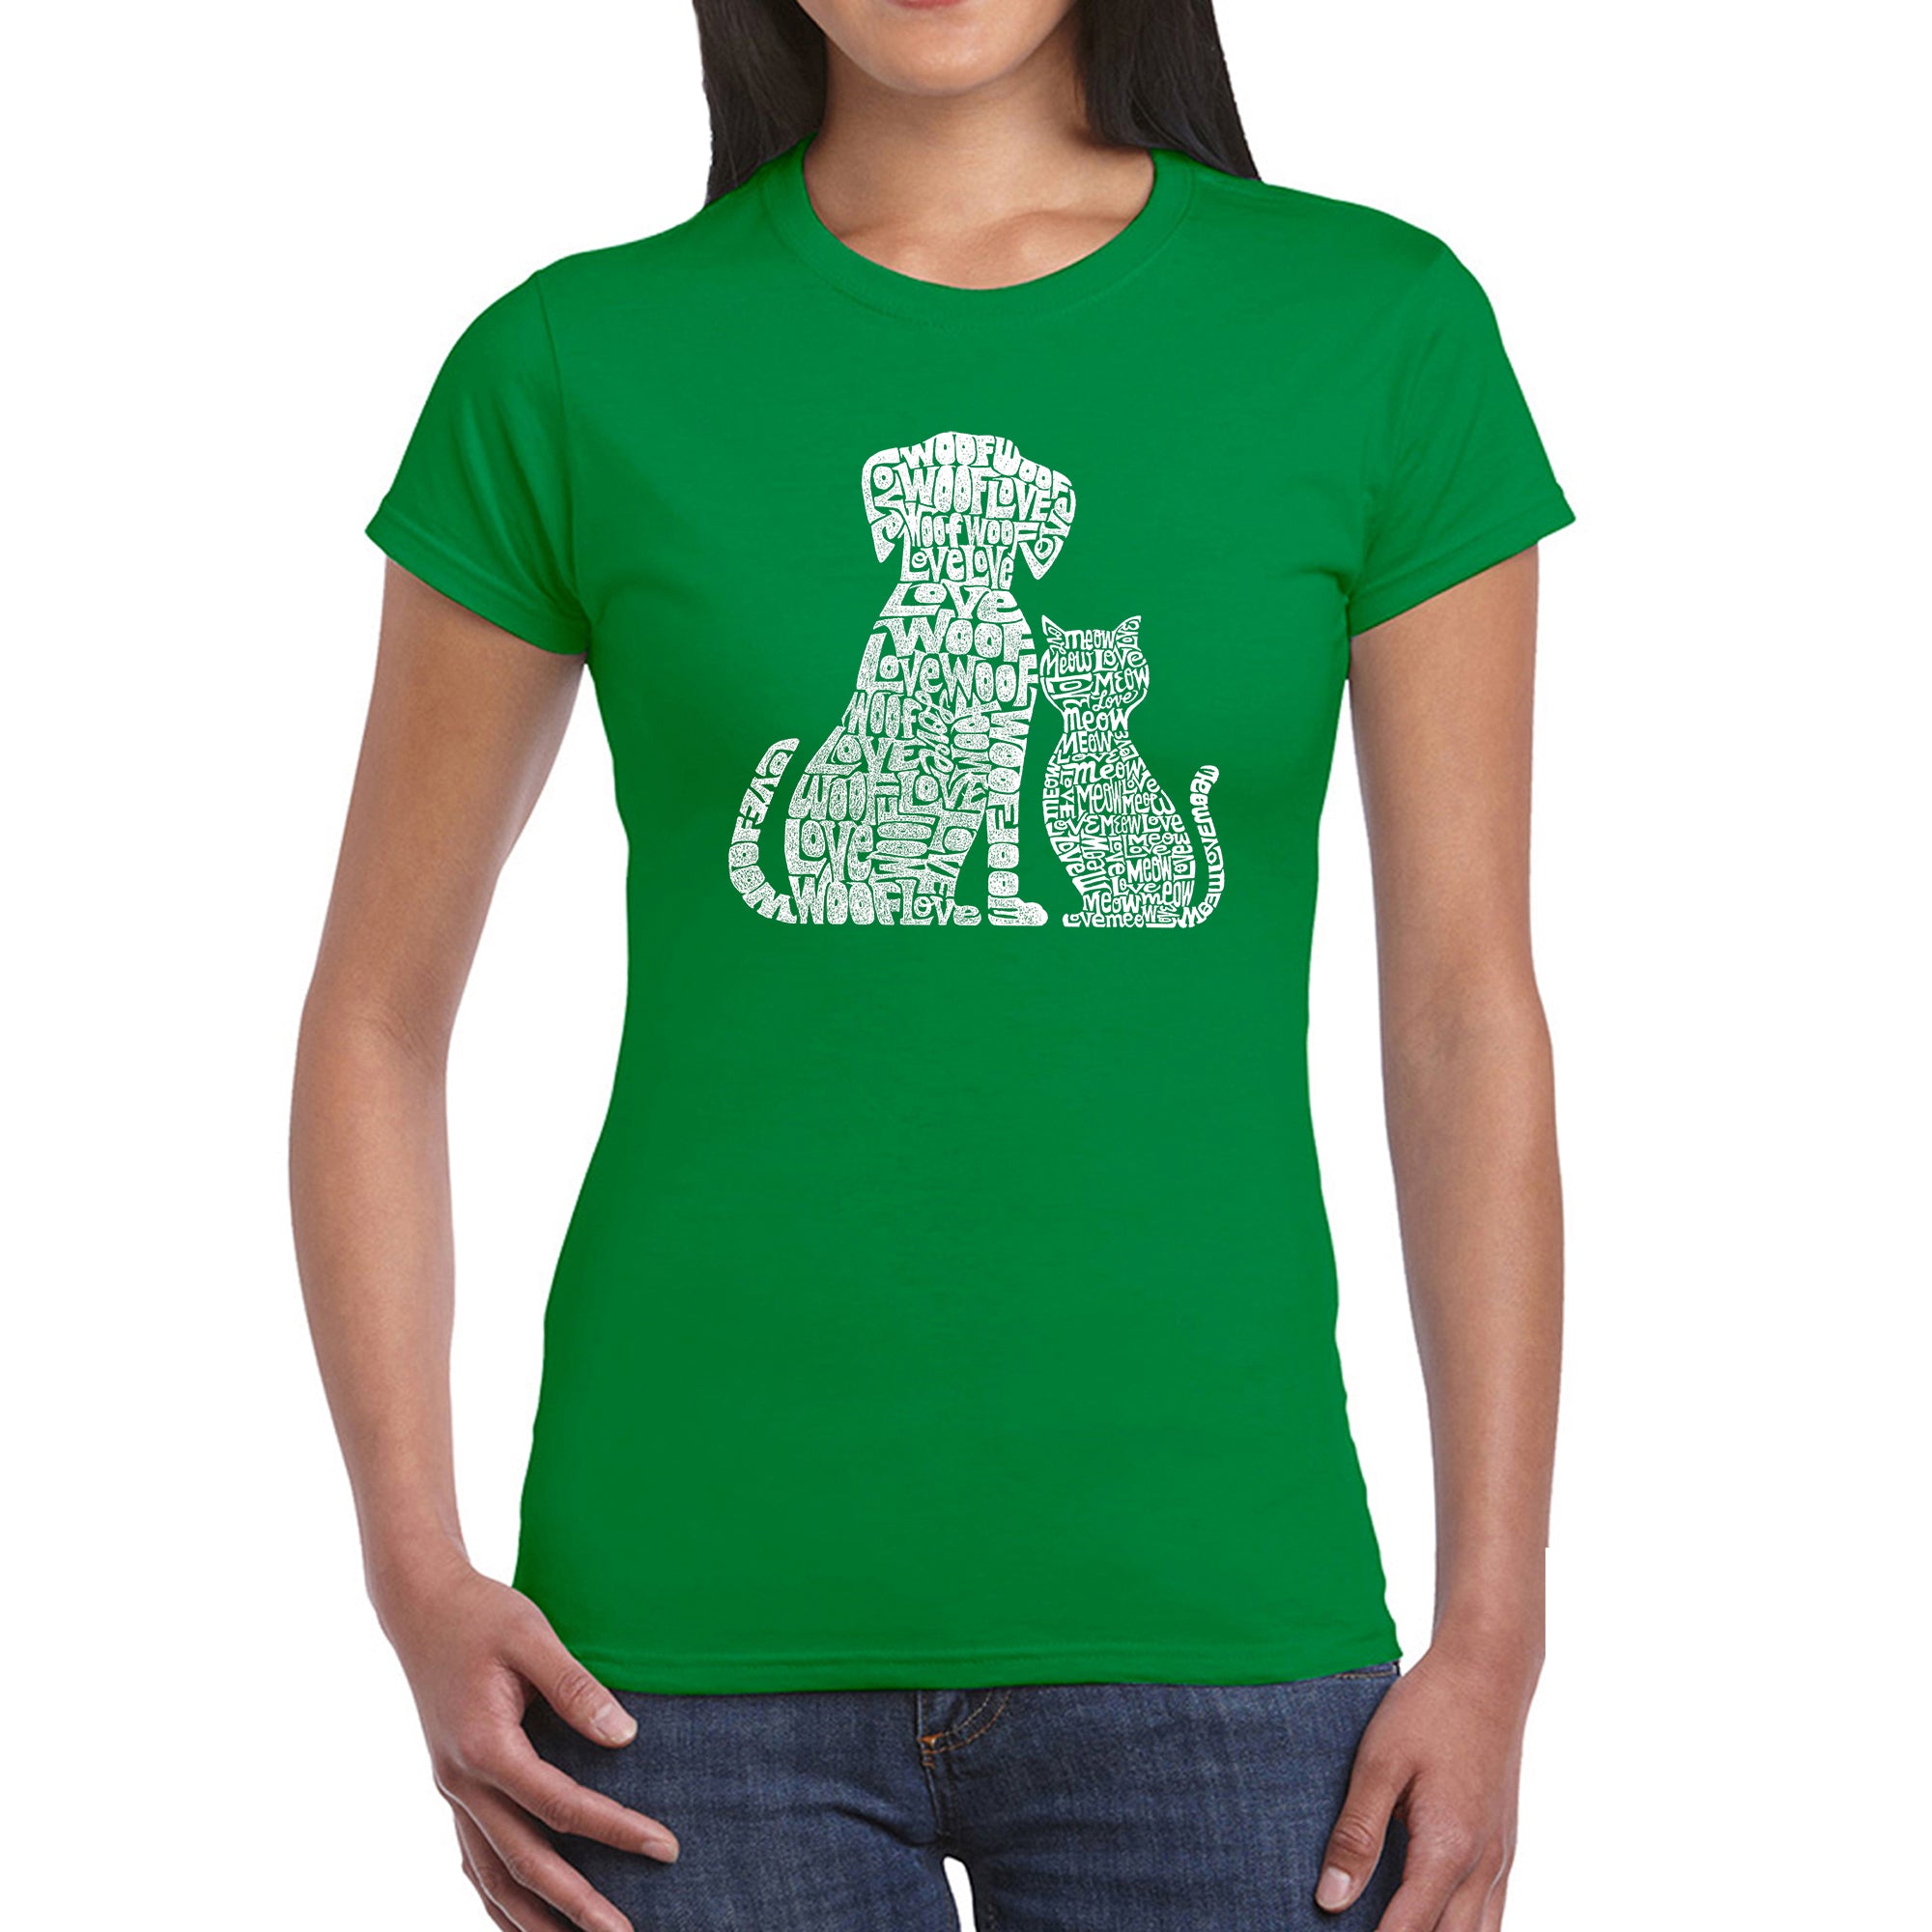 Dogs And Cats - Women's Word Art T-Shirt - Kelly - Medium